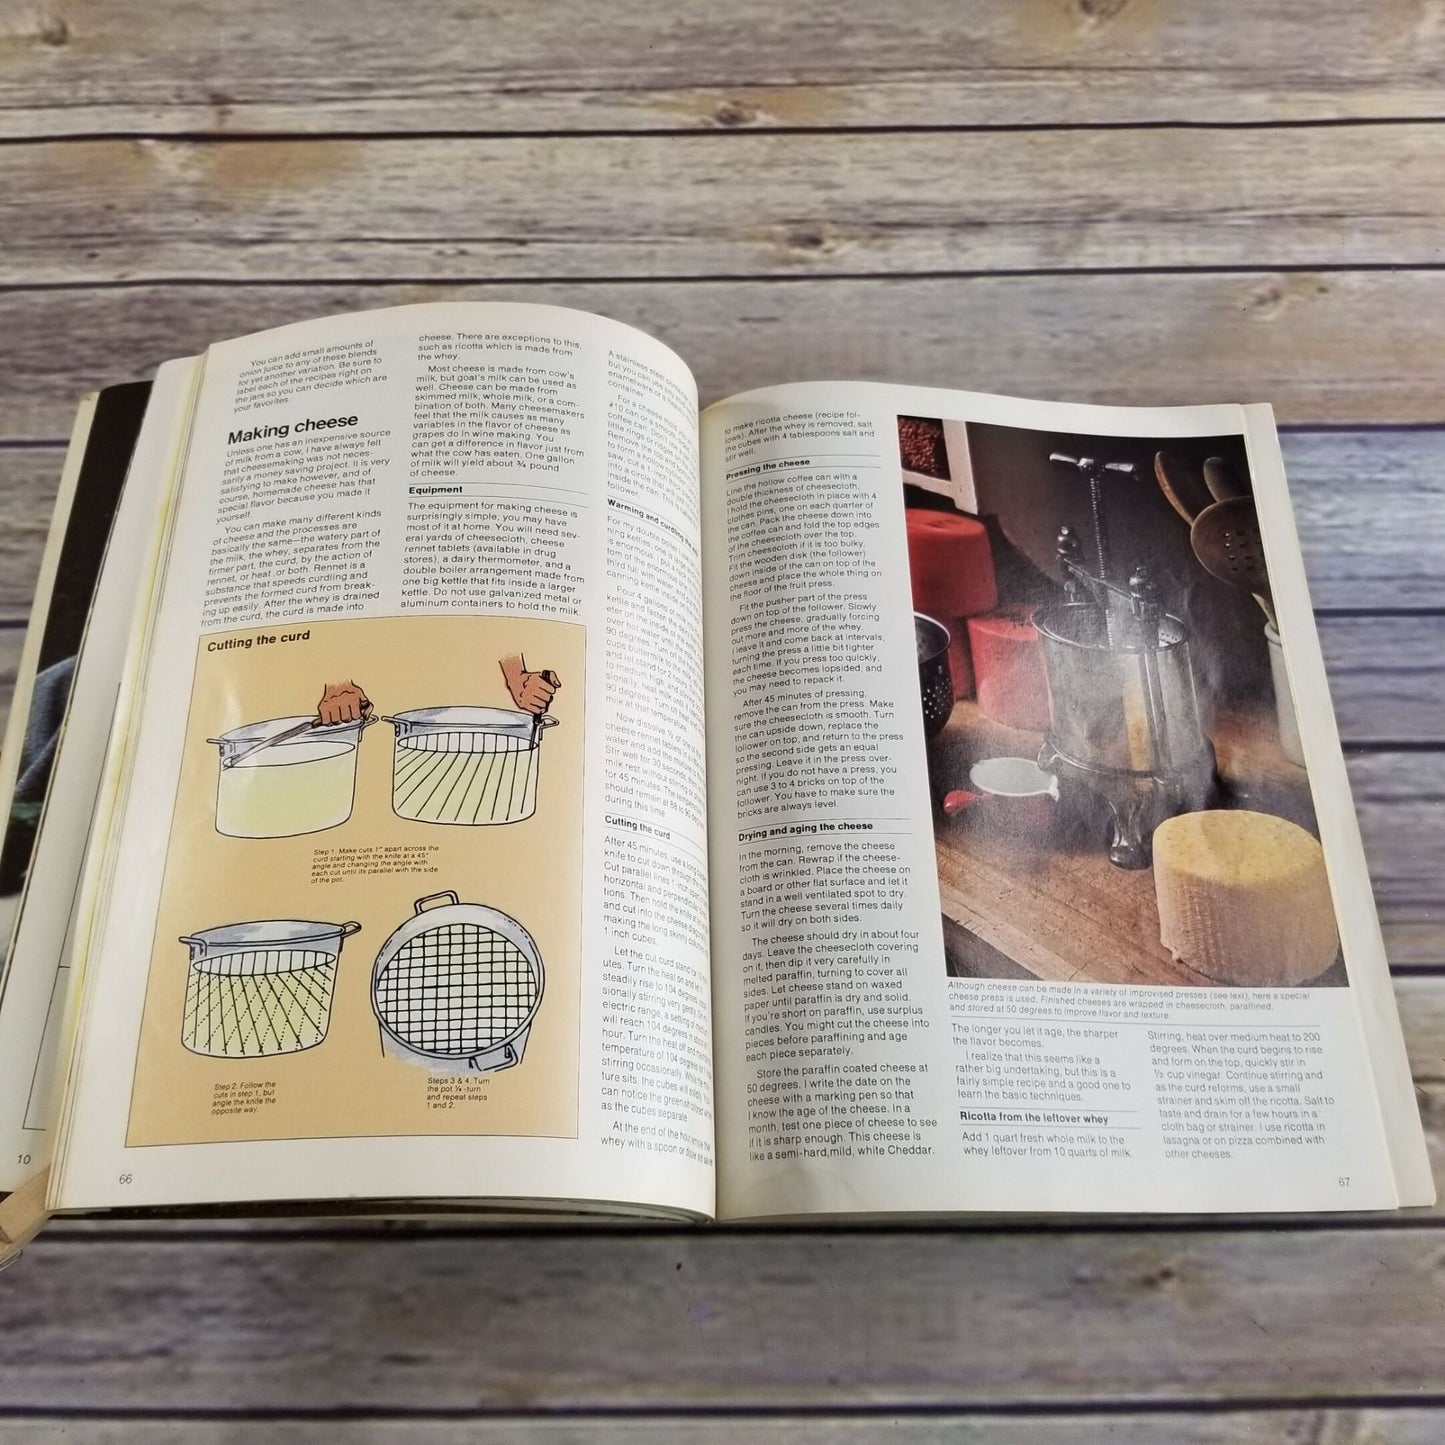 Vintage Cookbook 12 Months Harvest 1978 Canning Drying Freezing Smoking Recipes Ortho Books Chevron Paperback Planting Grinding